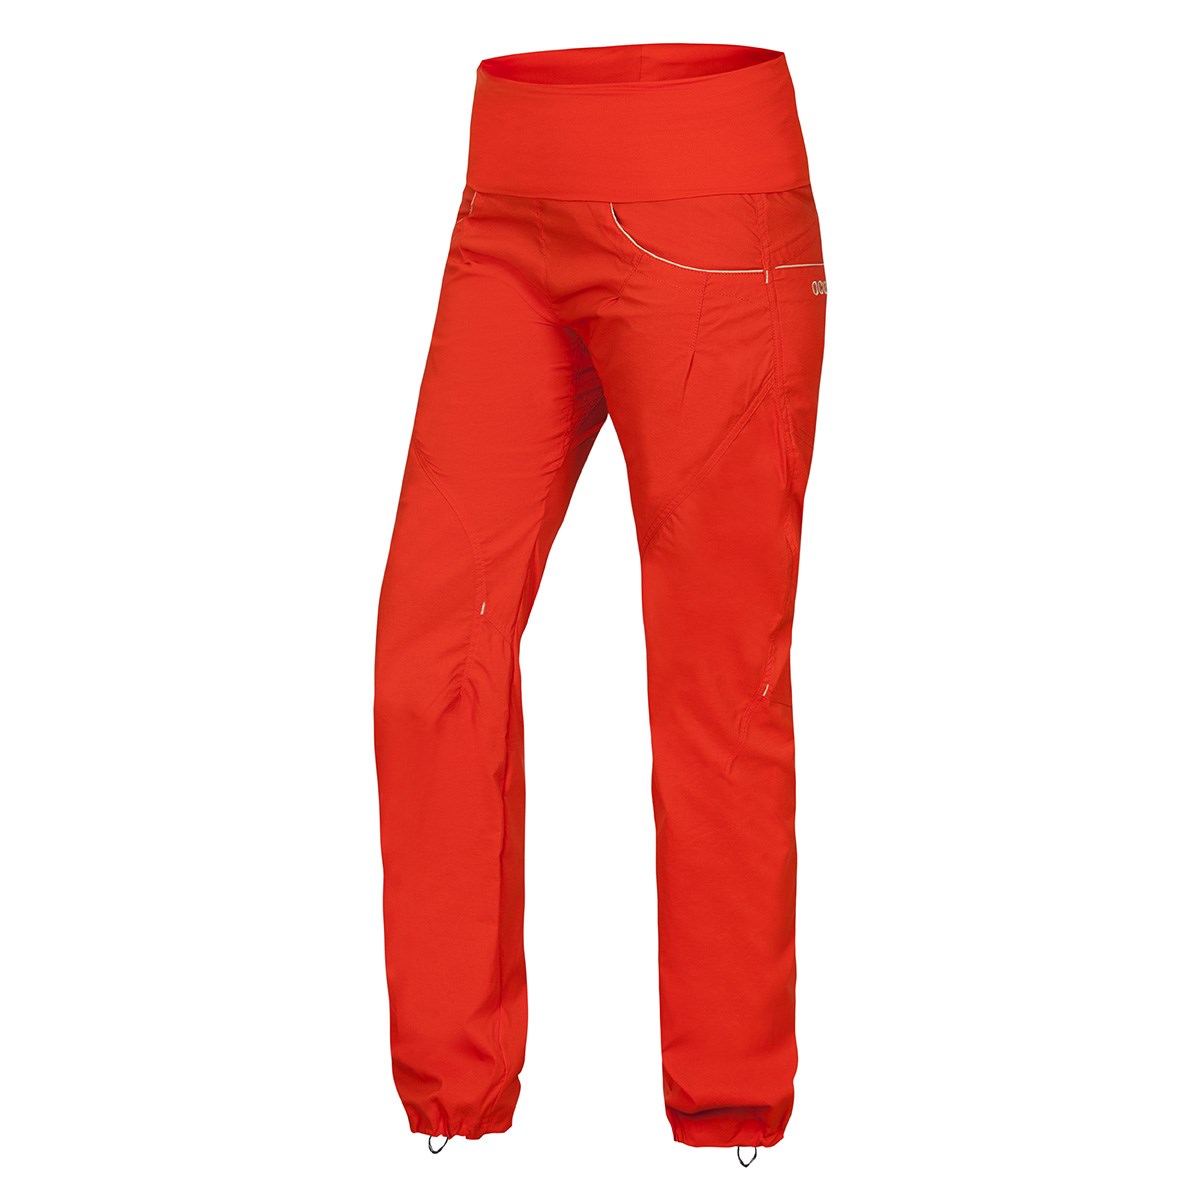 Kalhoty Ocún Noya Pants W orange poinciana Ocún 10025217 L-11